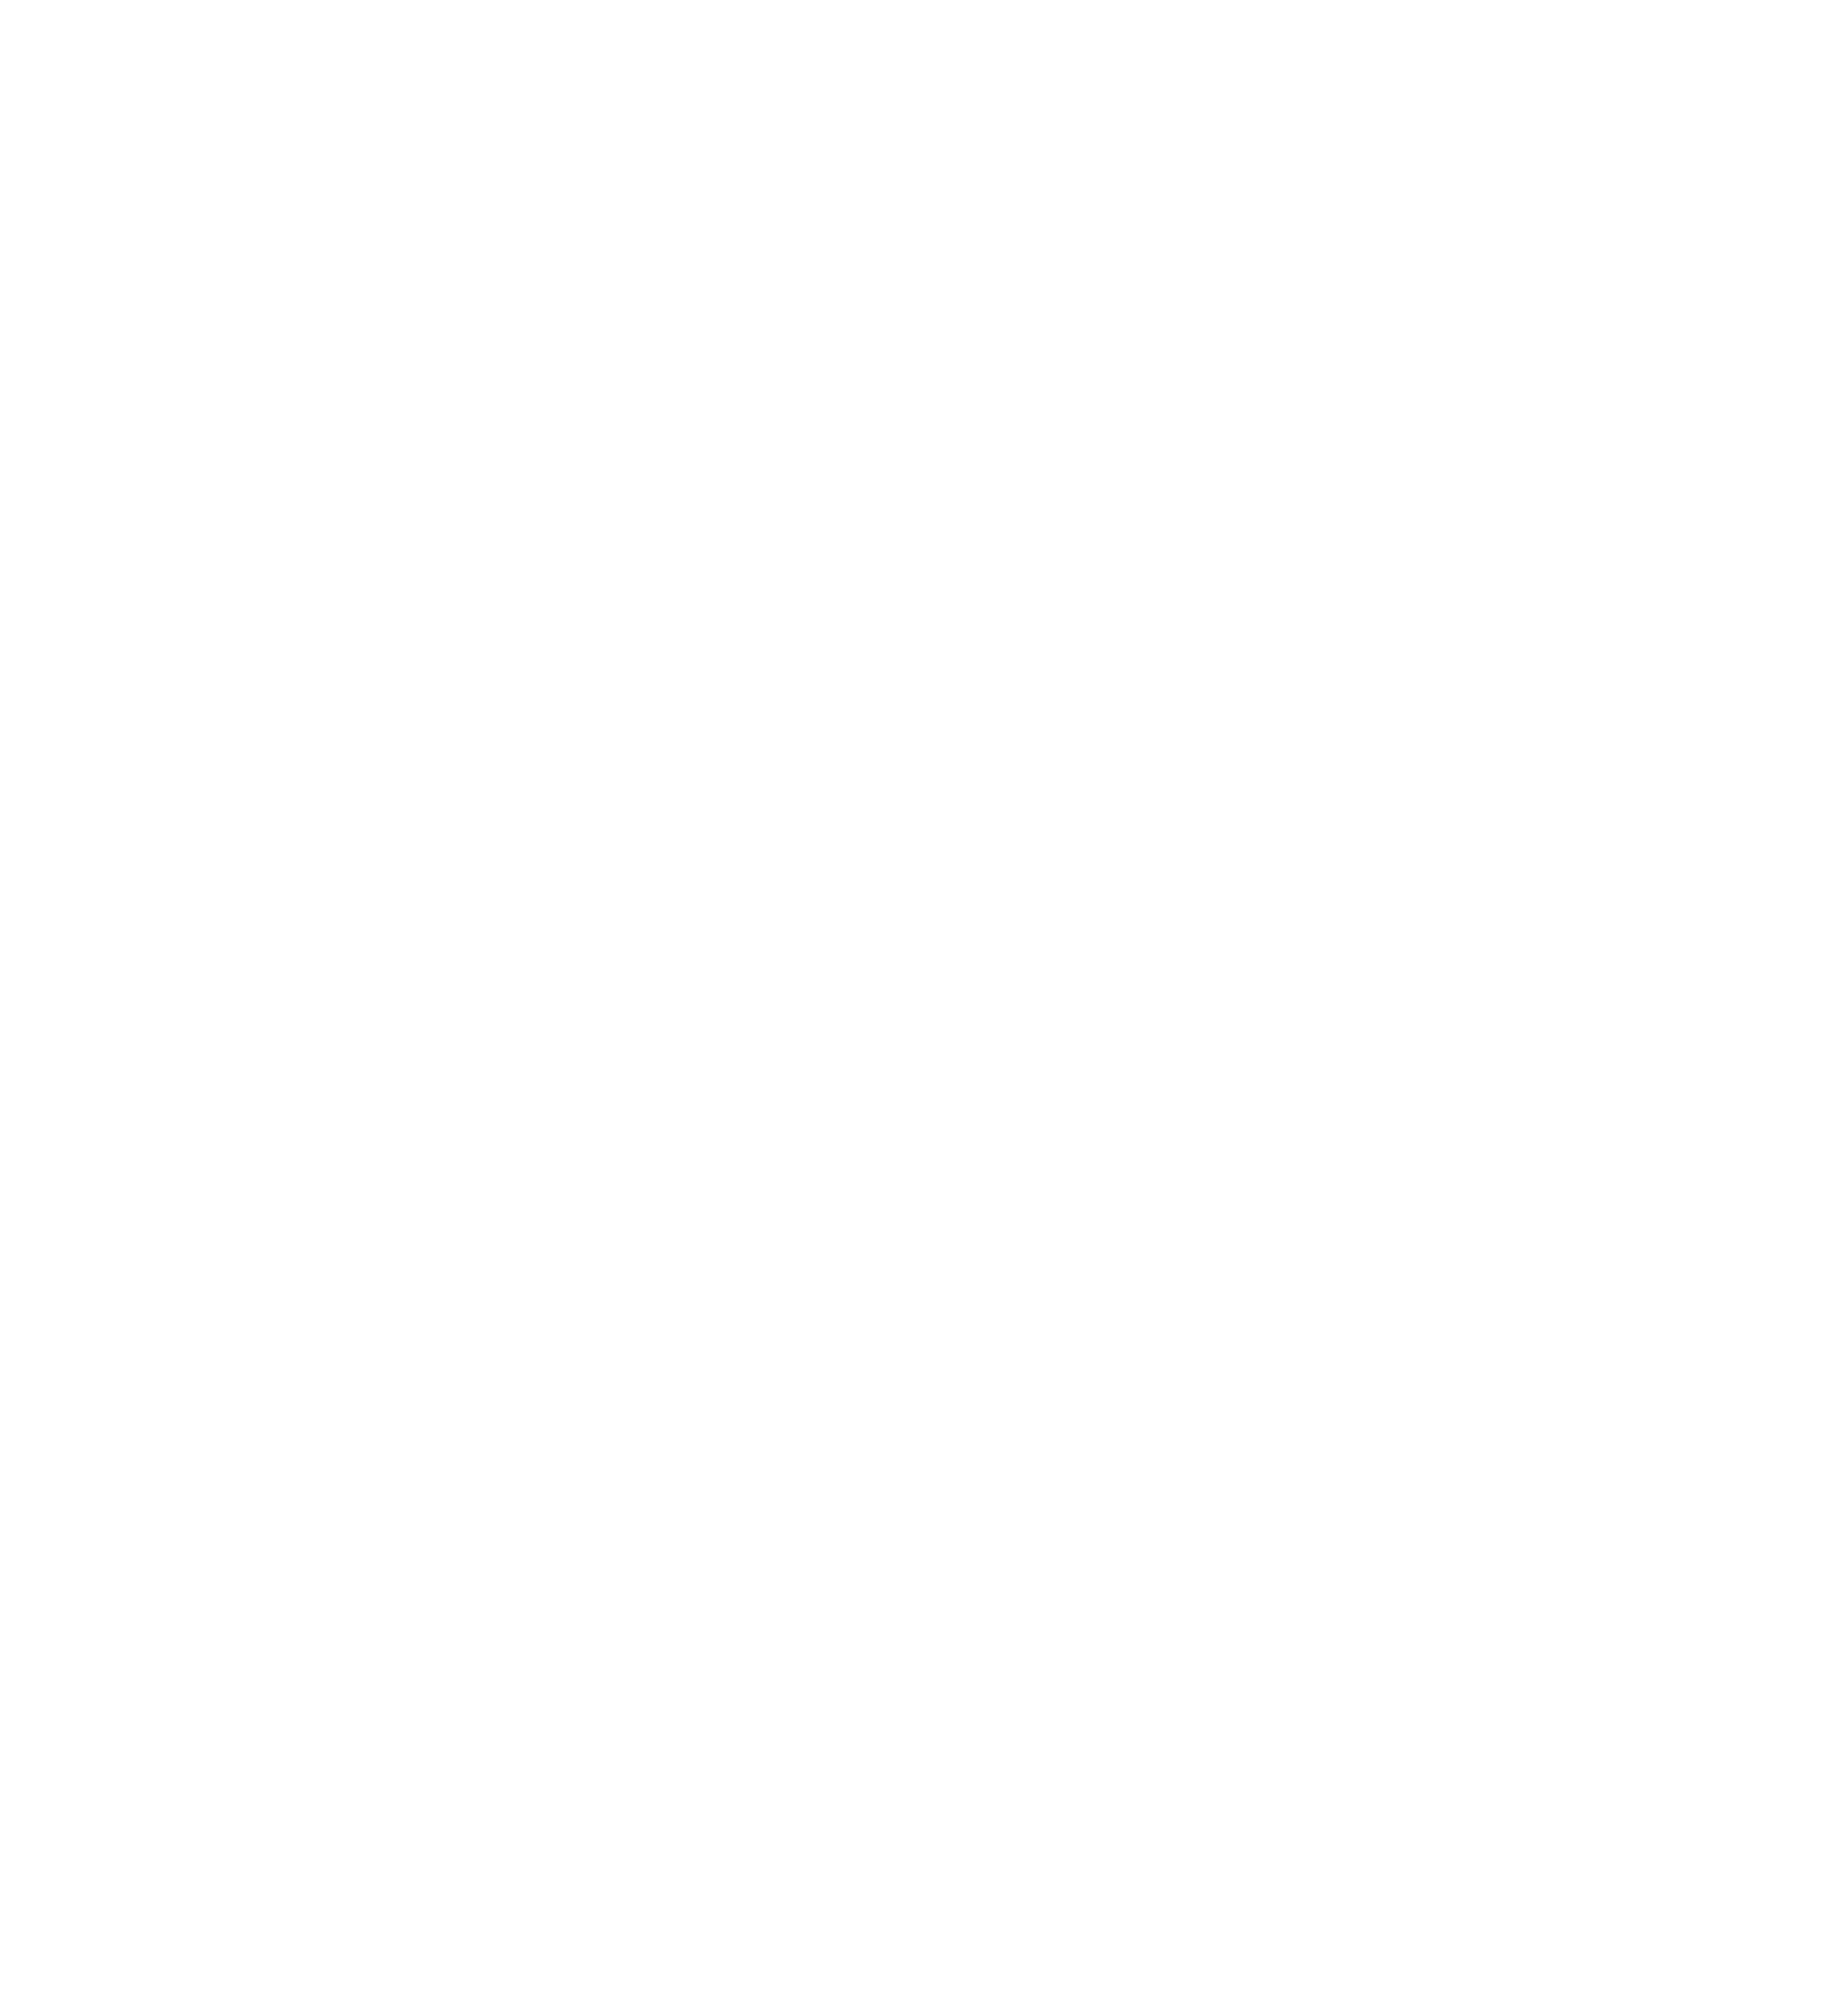 ERDETOOL Official EC / 竹本鎌製作所